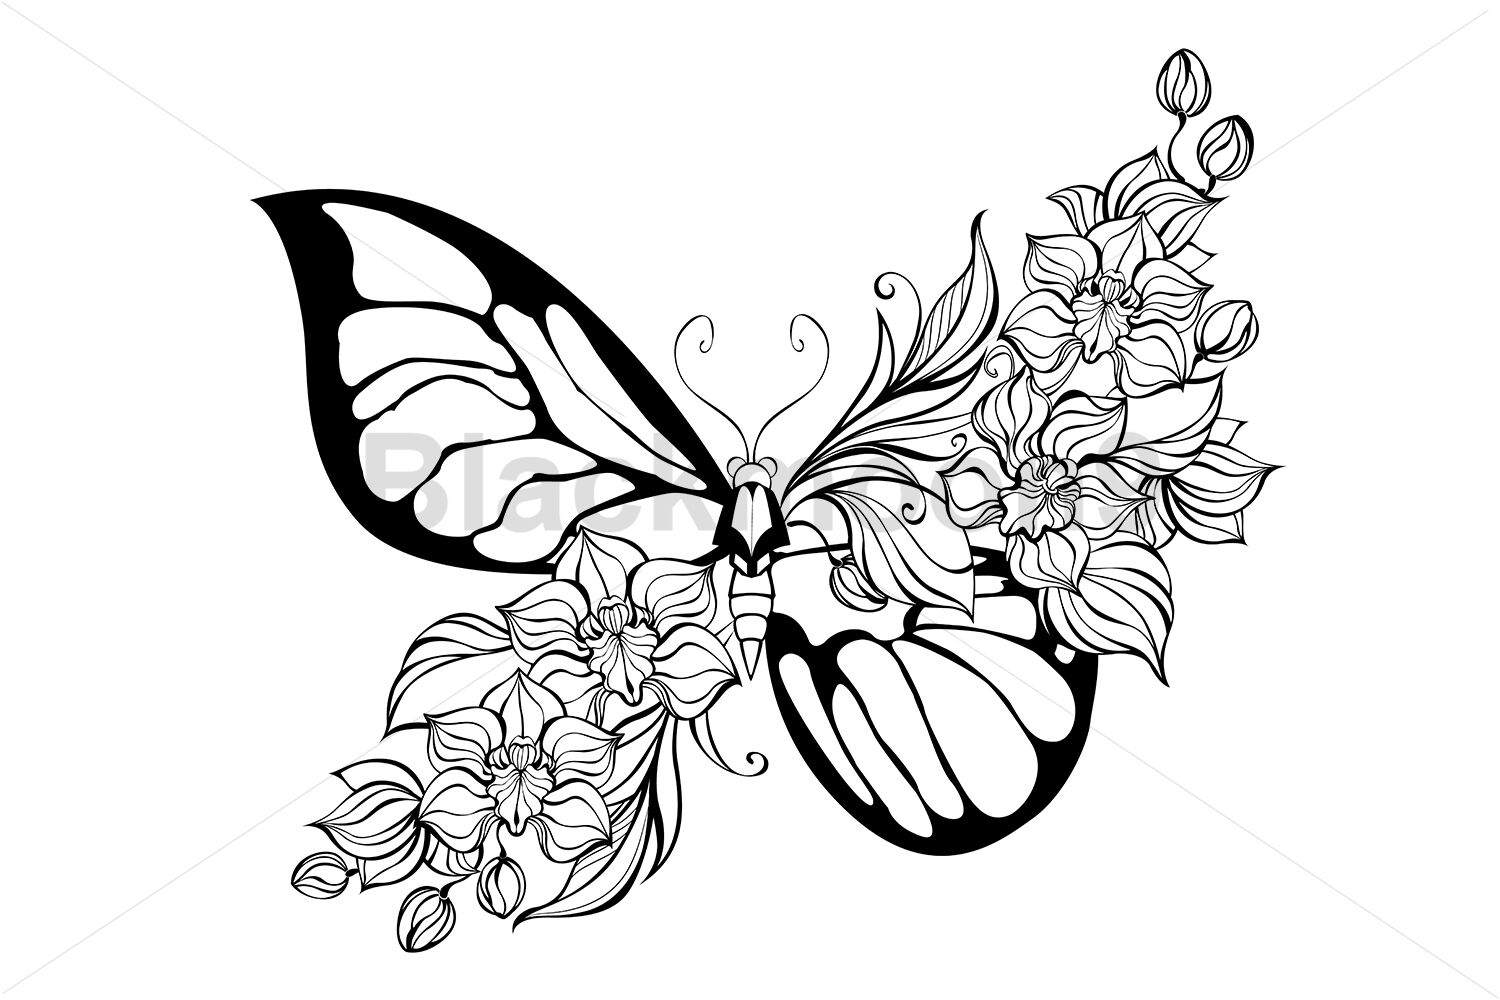 Butterflies in a Field of Freesias Drawing by Tiffany Gardiner - Pixels